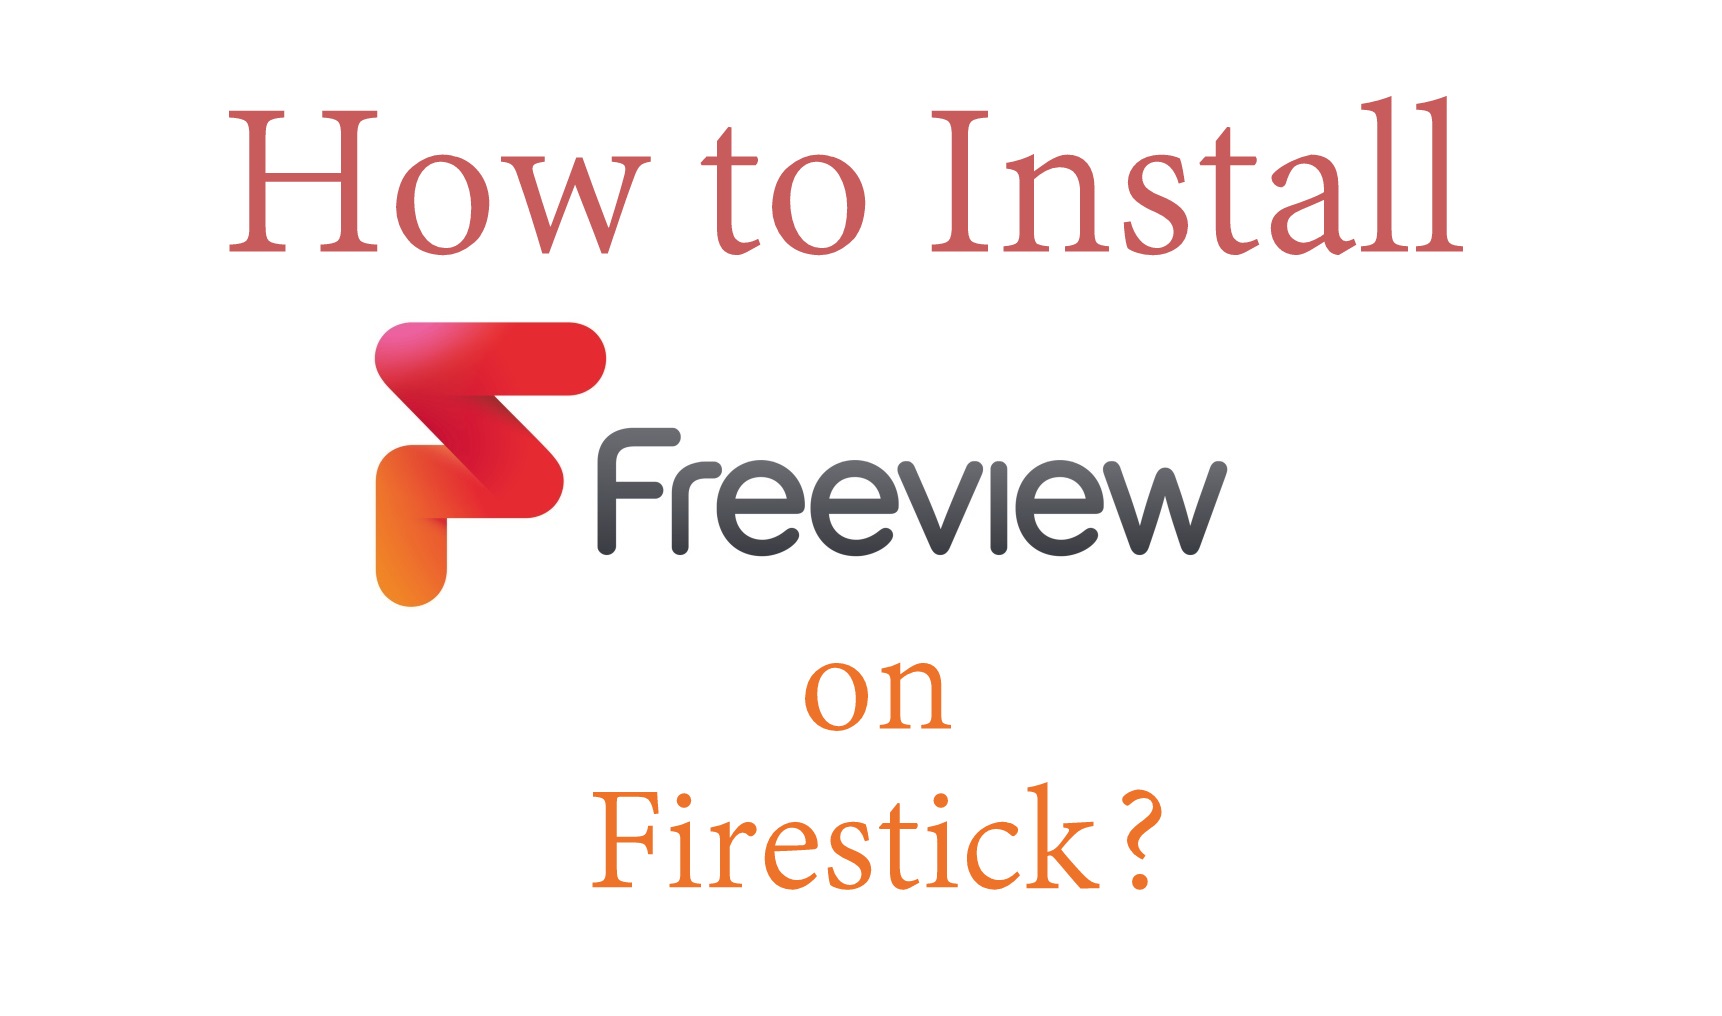 Cara menginstal Freeview di Firestick / Fire TV [2020] 5